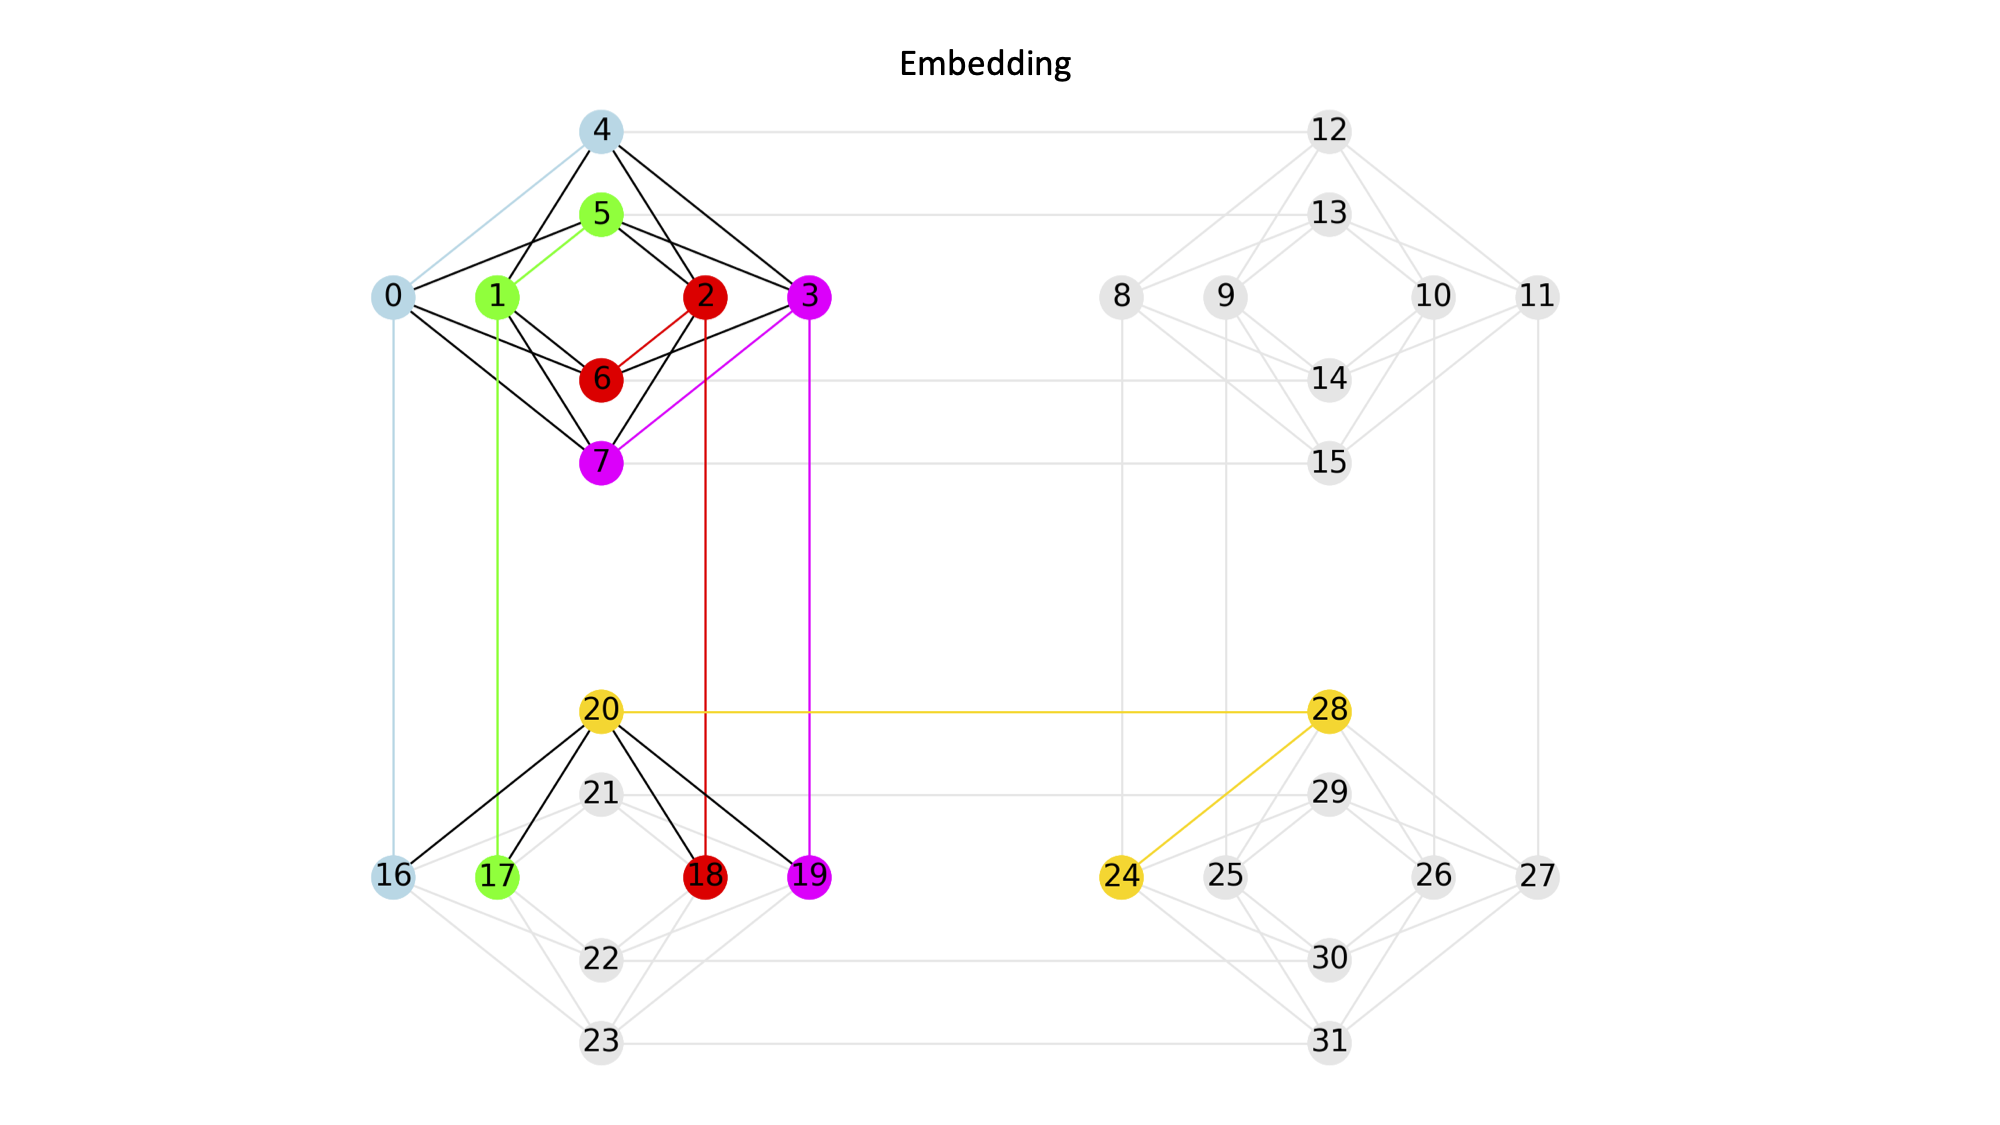 Embedding source K5 graph onto target Chimera graph